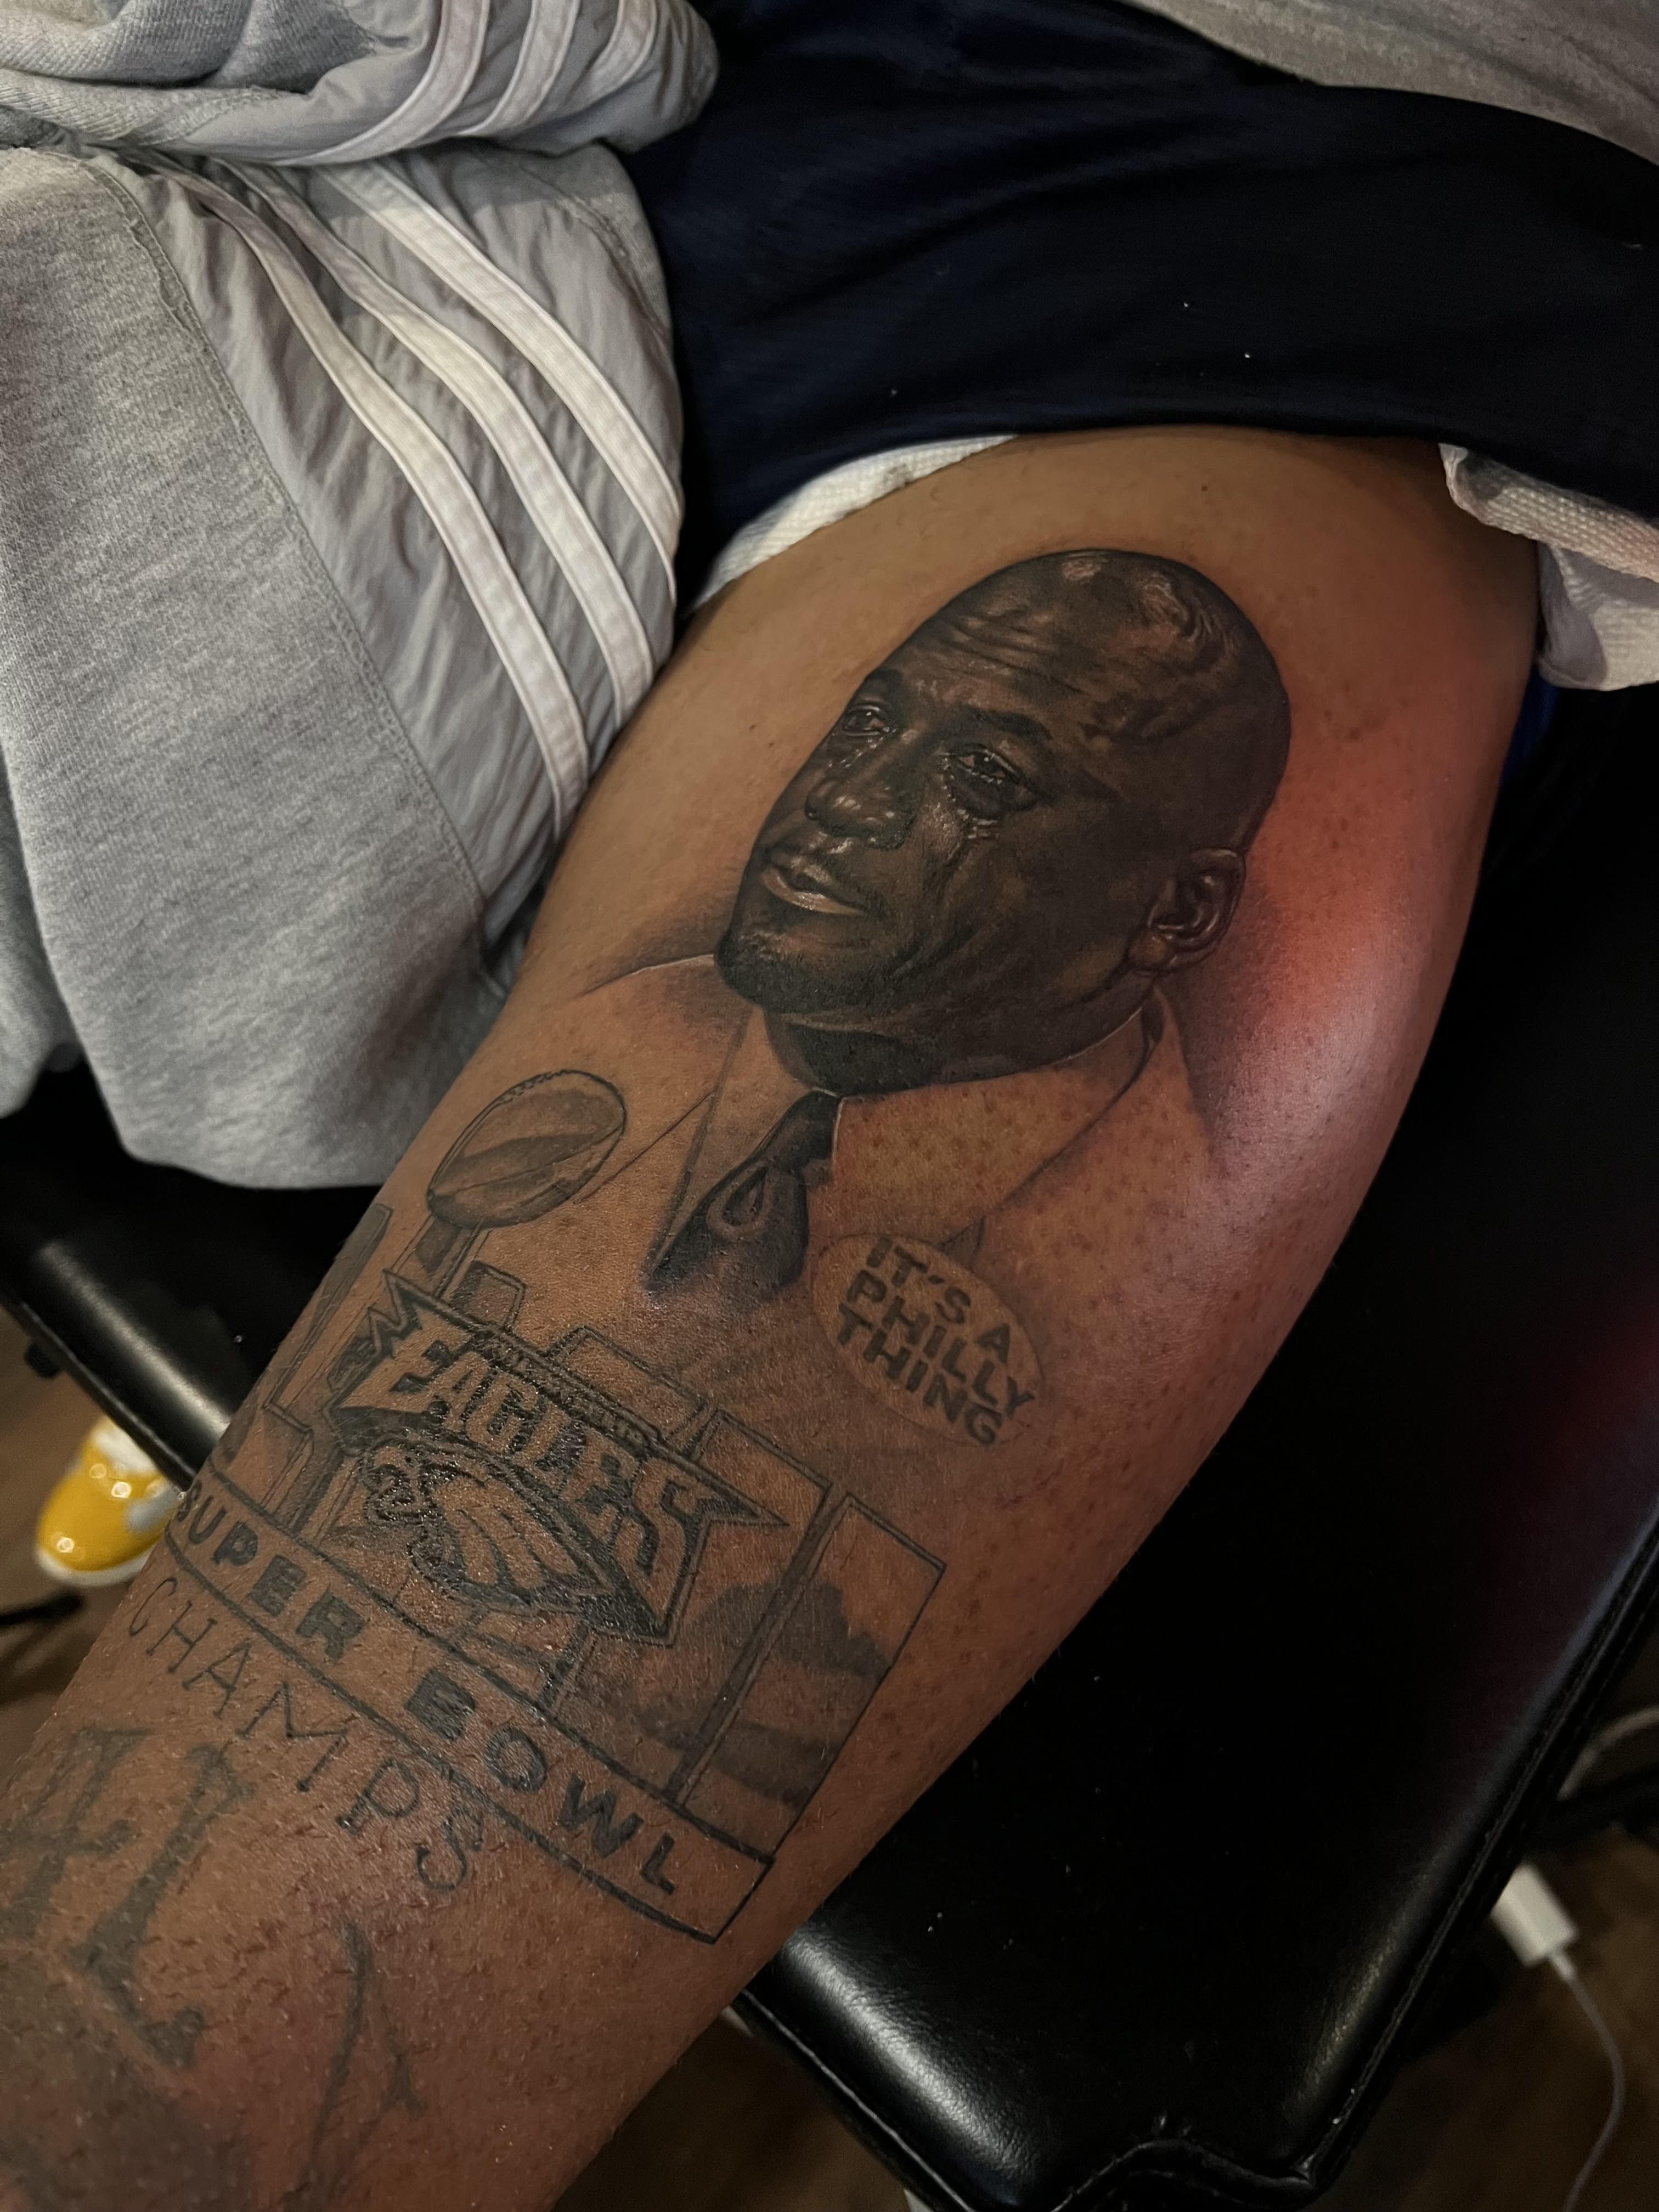 30 Philadelphia Eagles Tattoo Designs For Men  NFL Ink Ideas